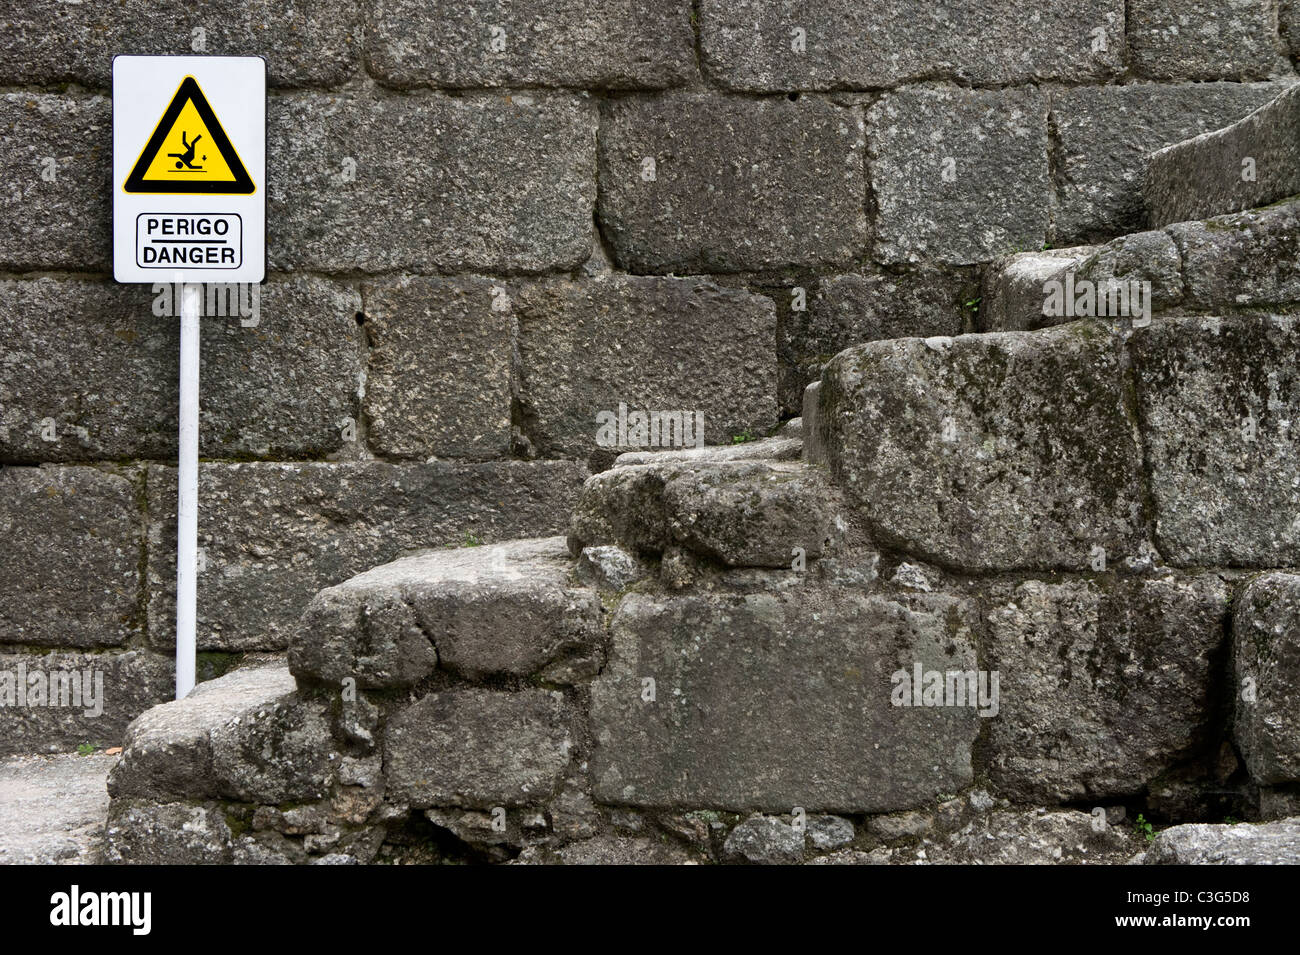 Escaleras peligrosas - perigo señal de peligro Foto de stock